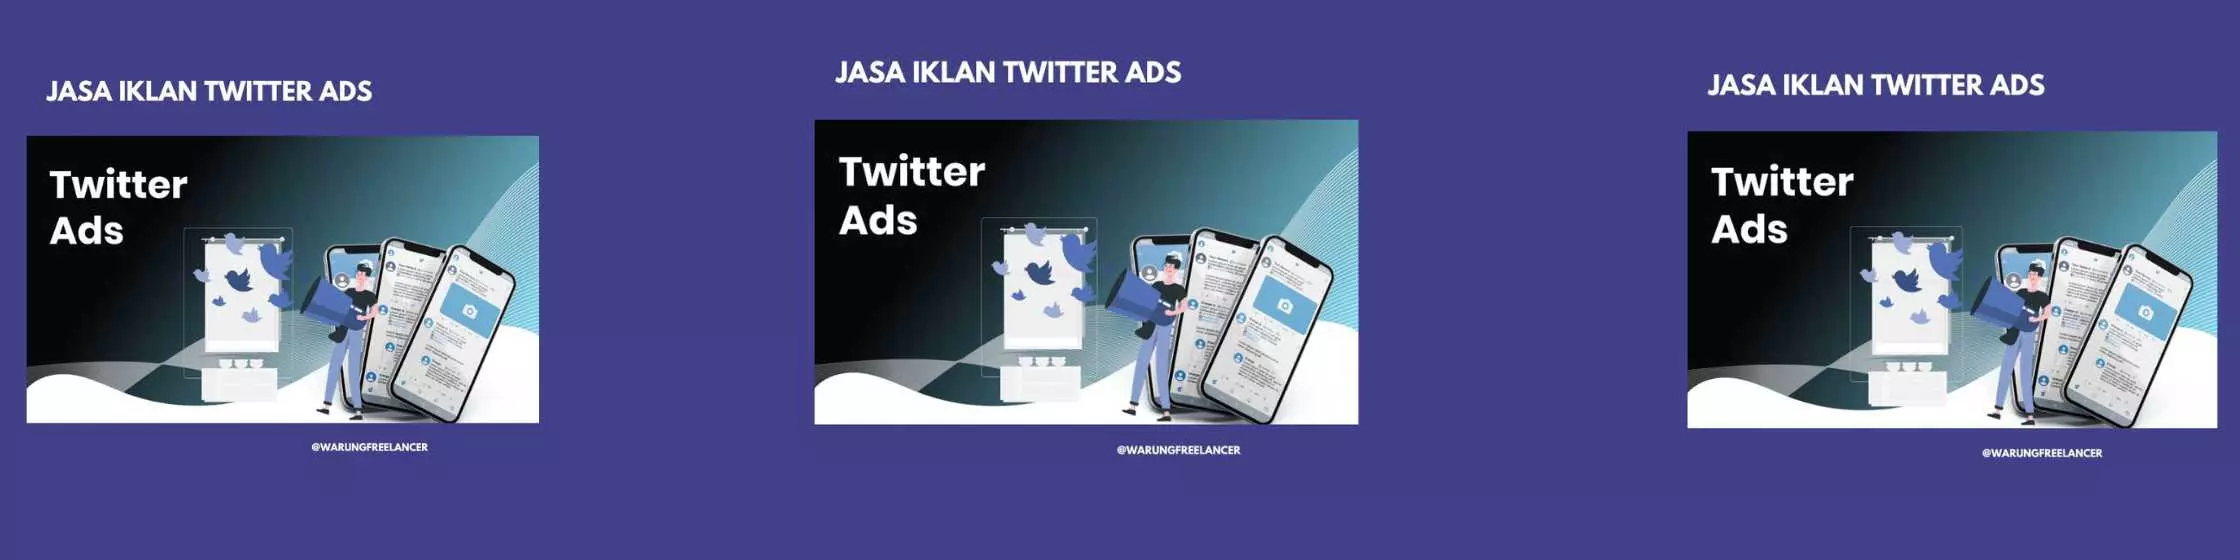 Jasa Iklan Twitter Ads